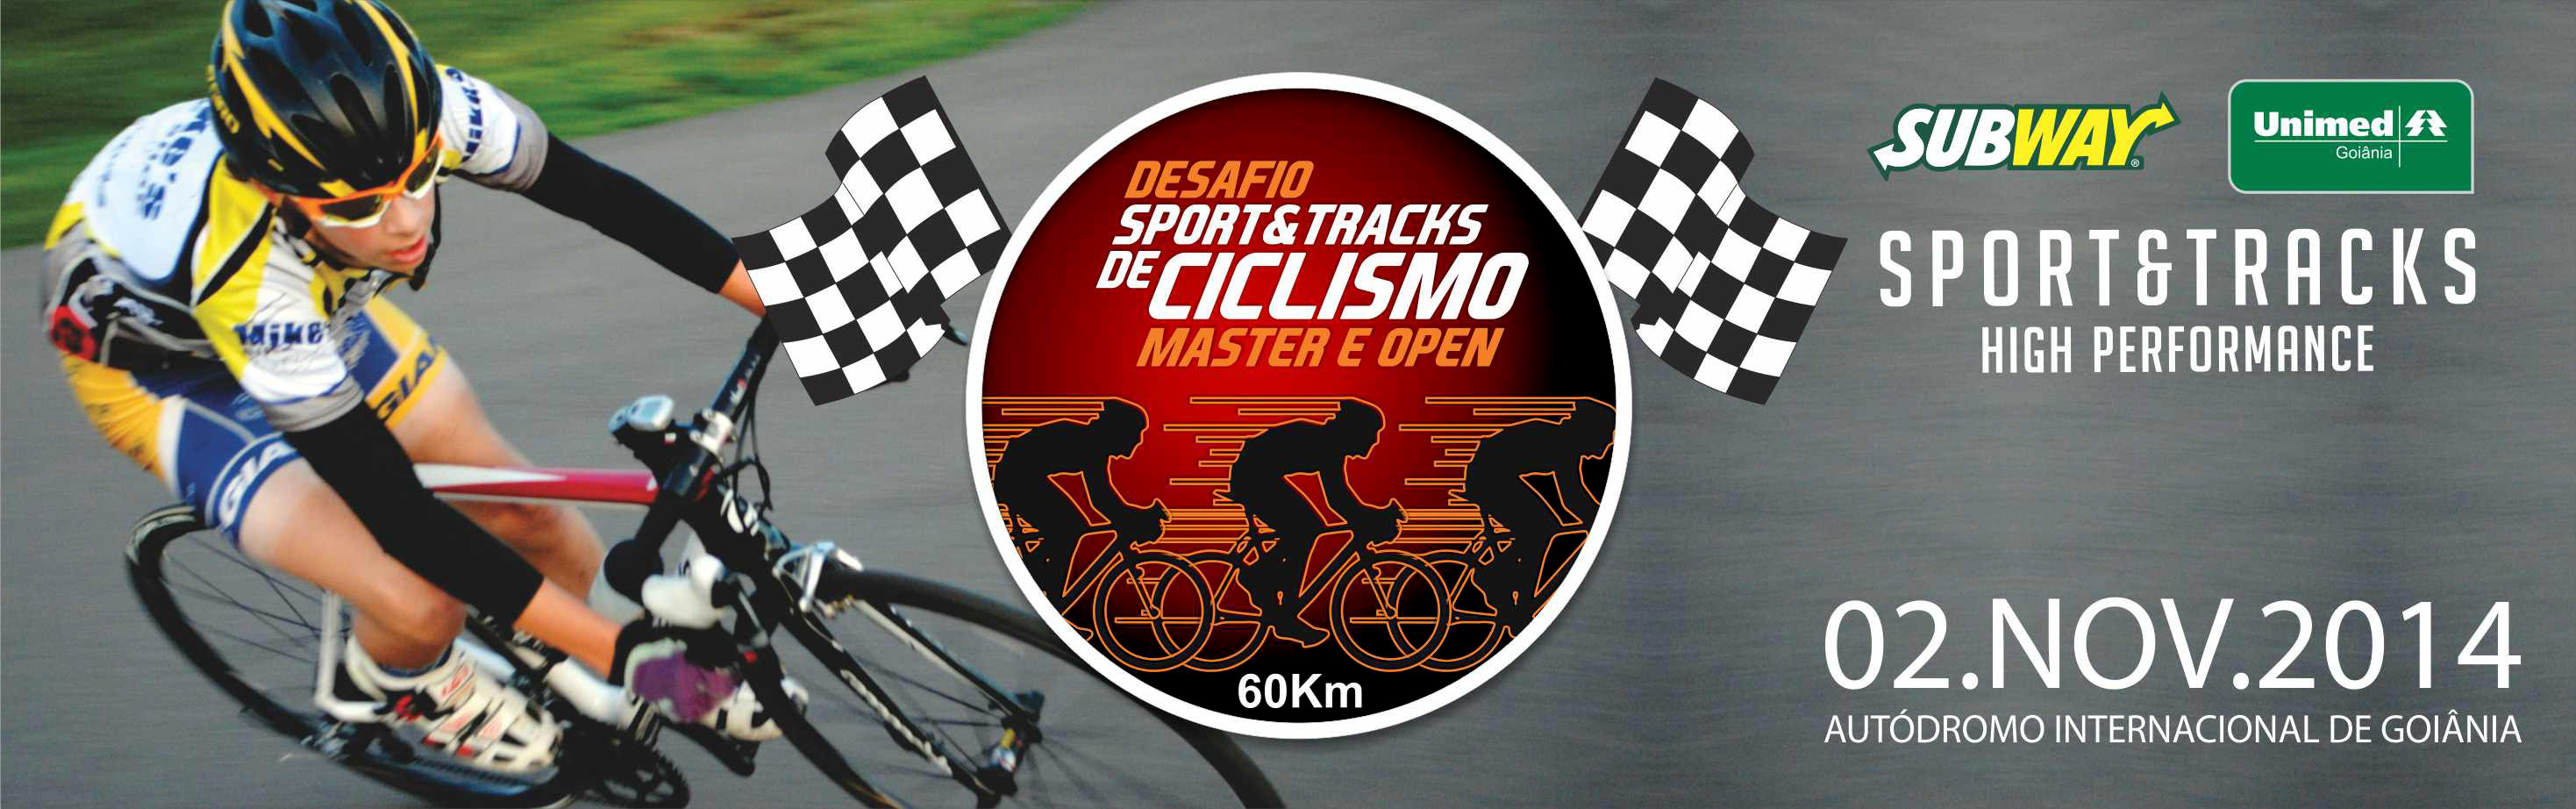 DESAFIO SPORT&TRACKS DE CICLISMO - Master e Open